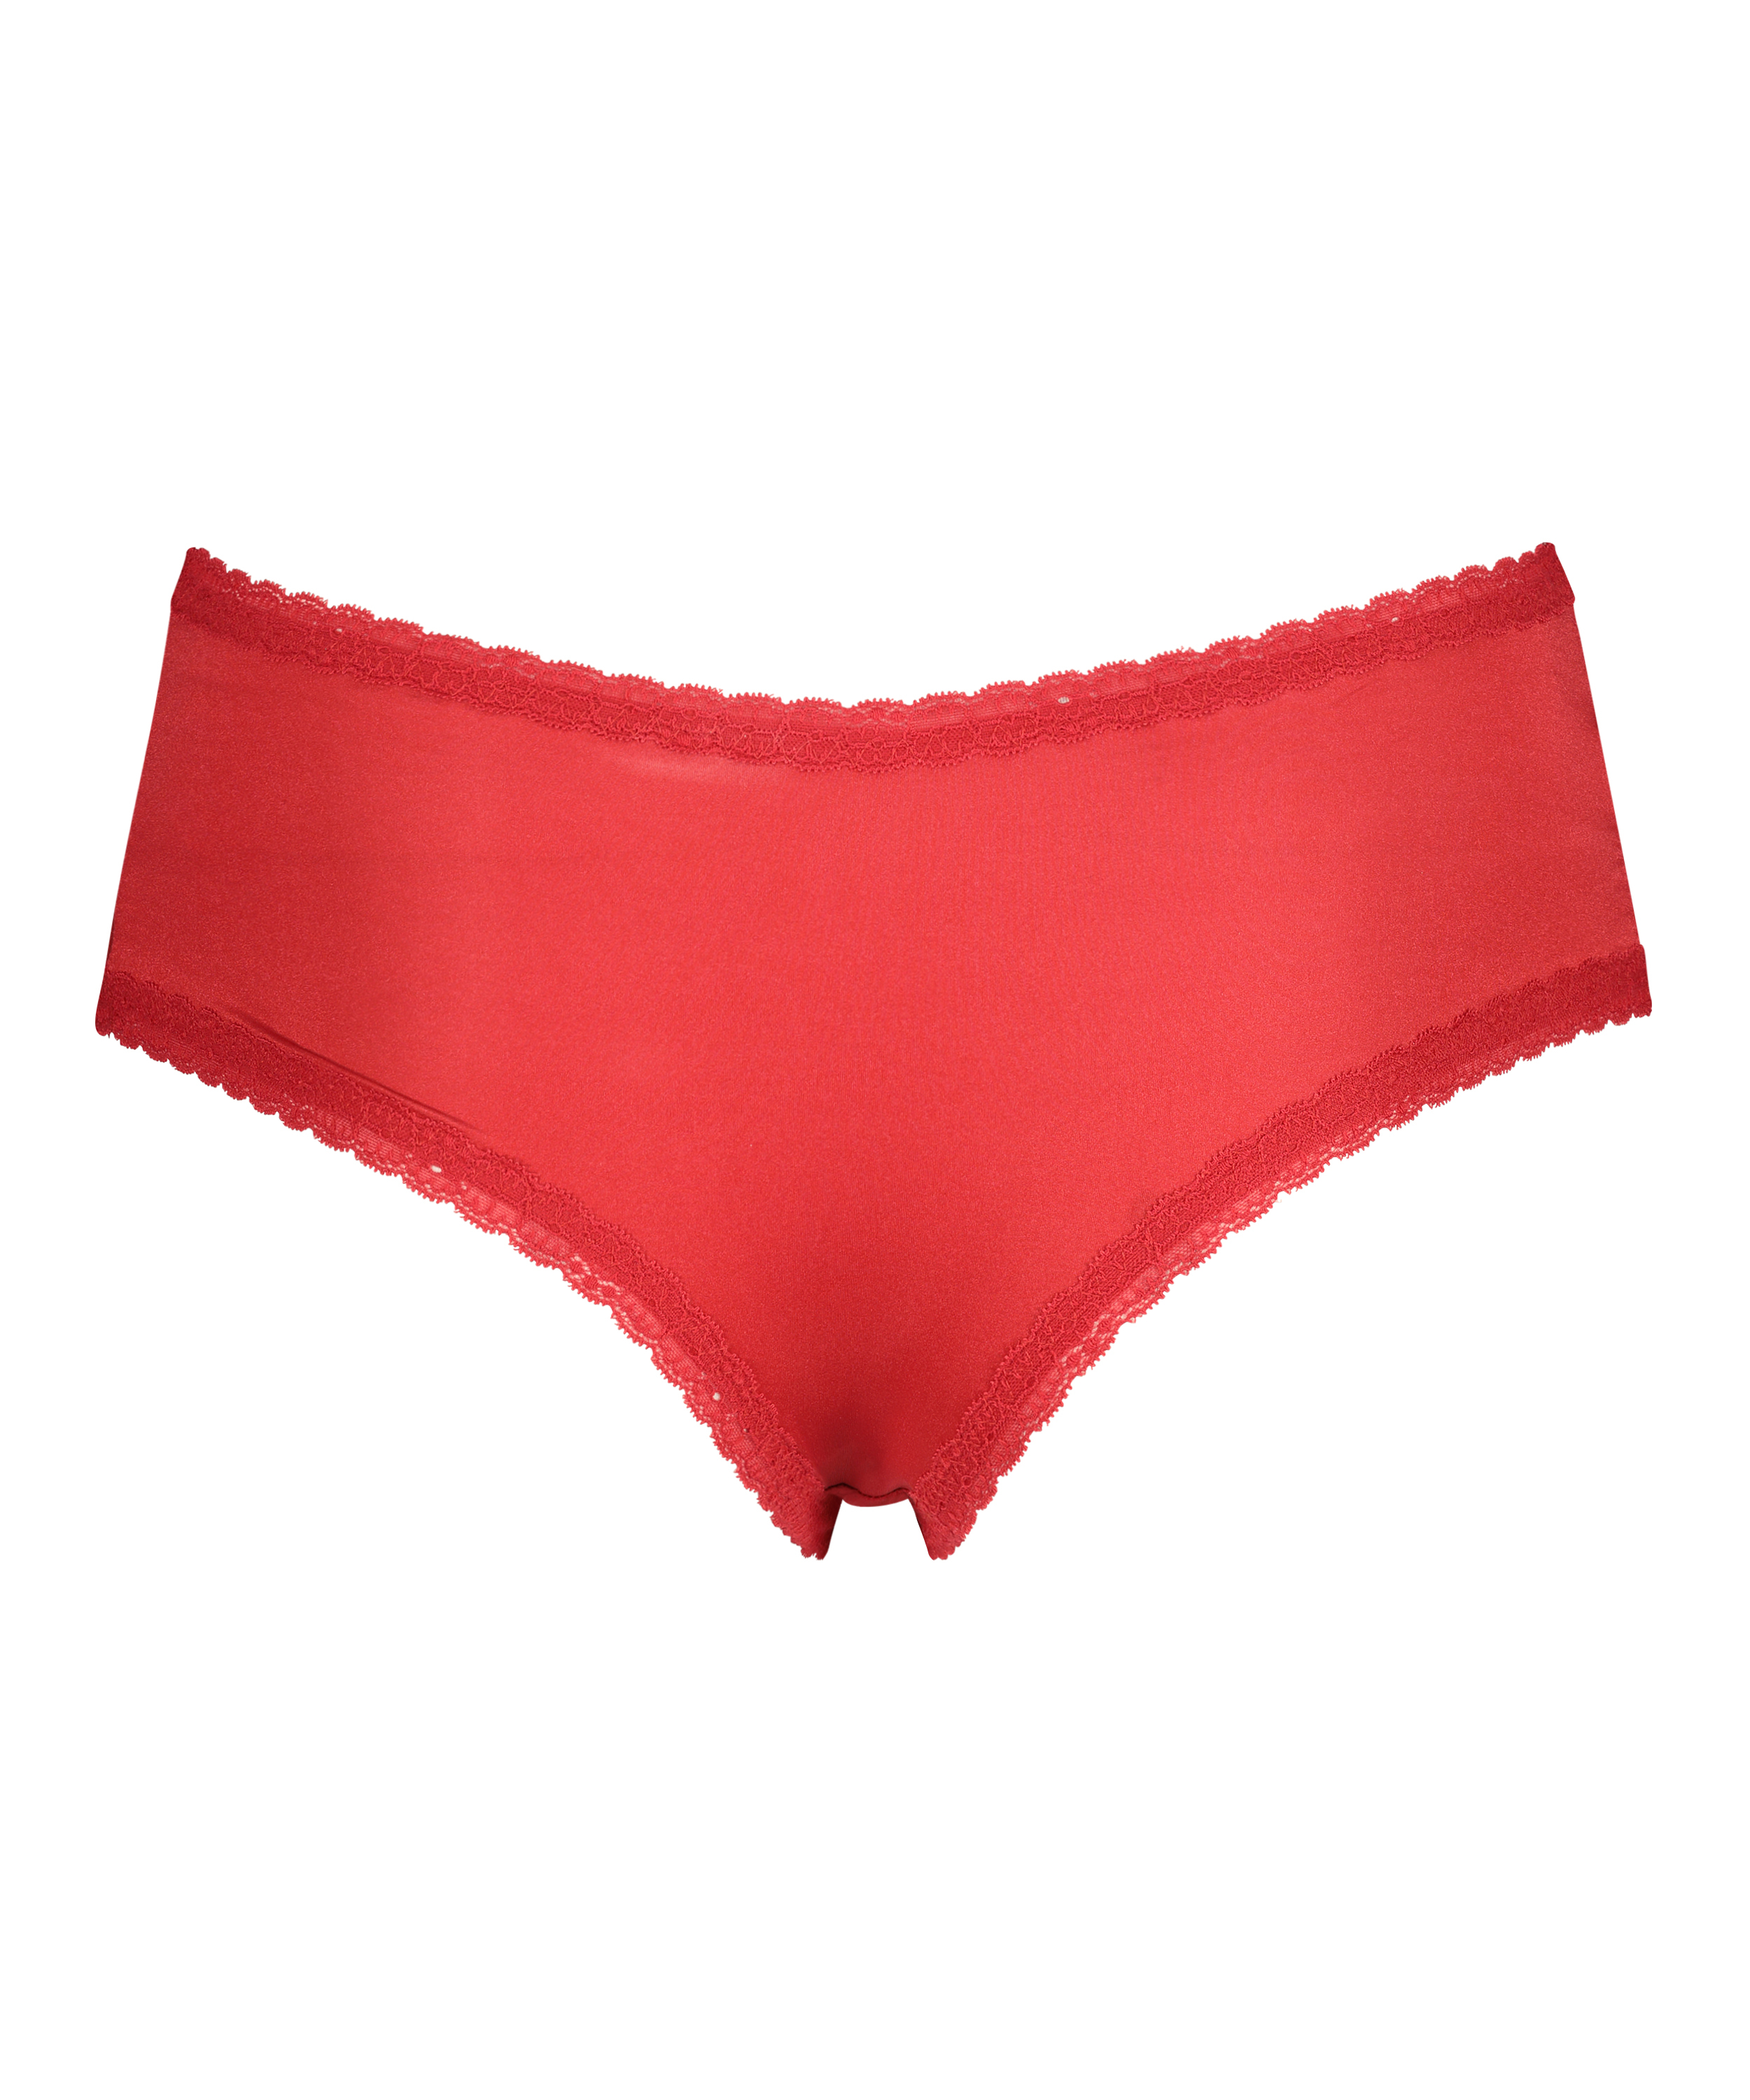 Vixen Curvy v-shaped brazilian, Red, main